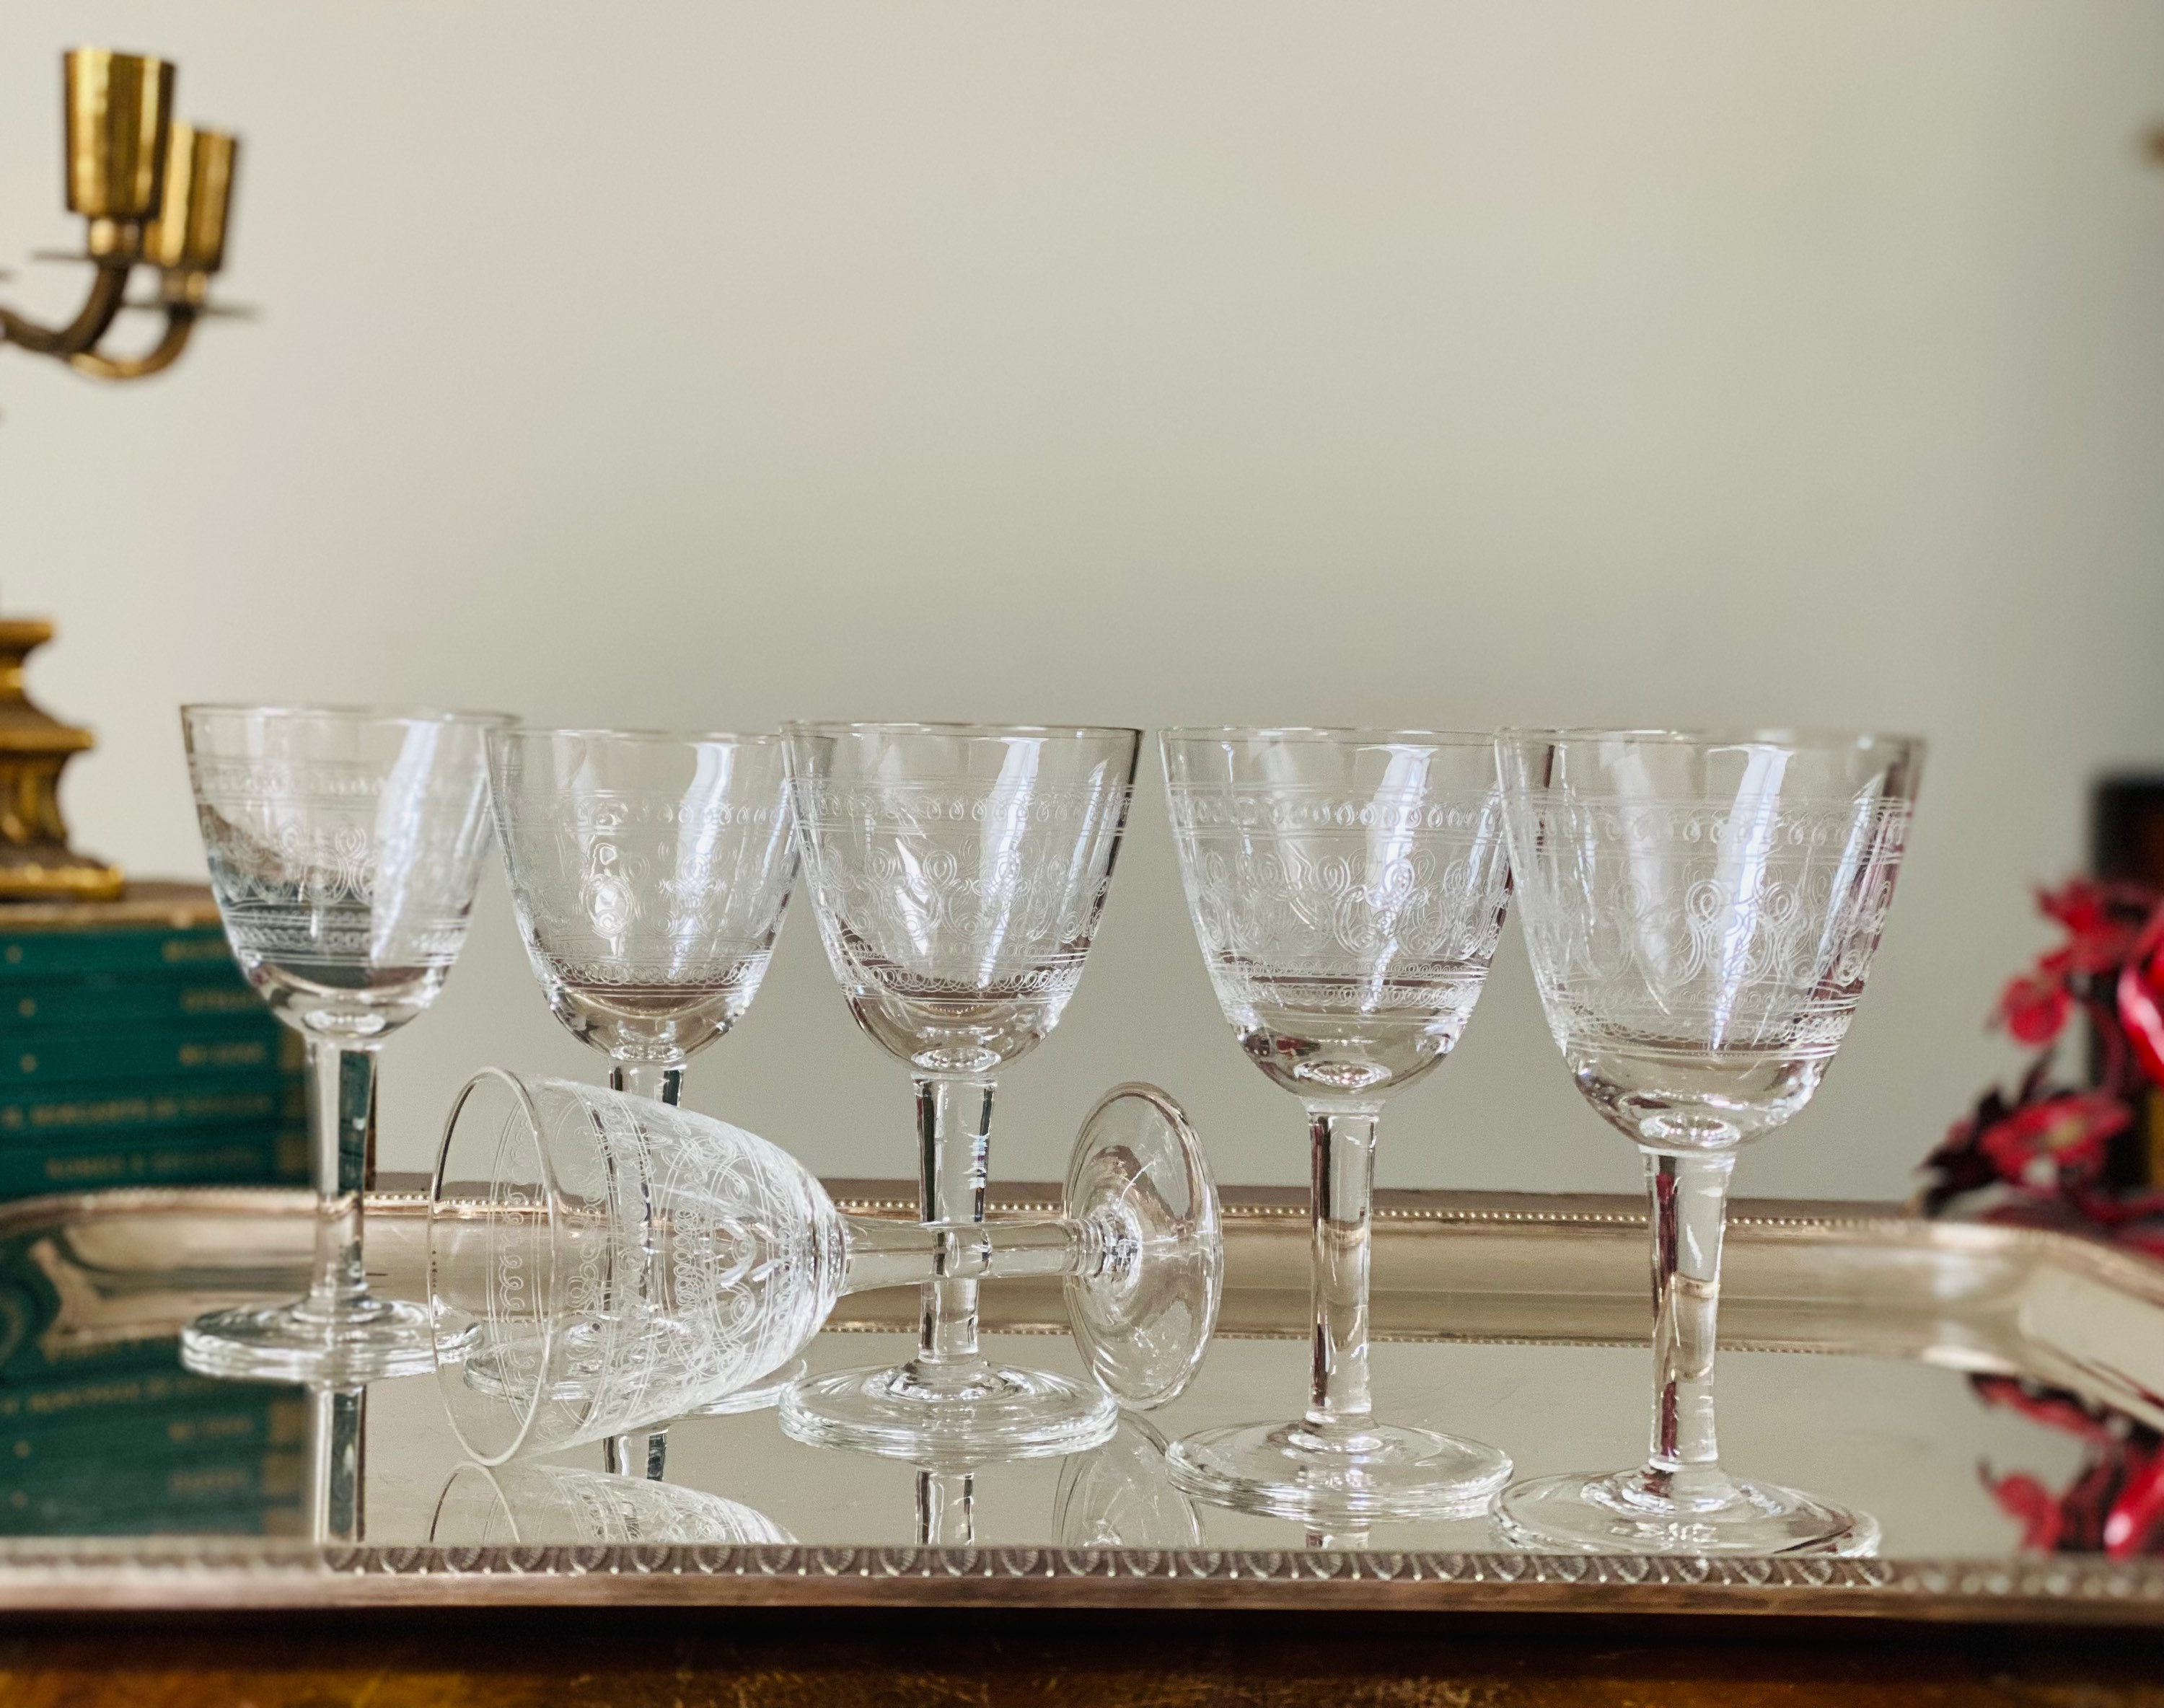 antique drinking glasses - Google zoeken  Crystal glassware, Antique  glassware, Antique glass